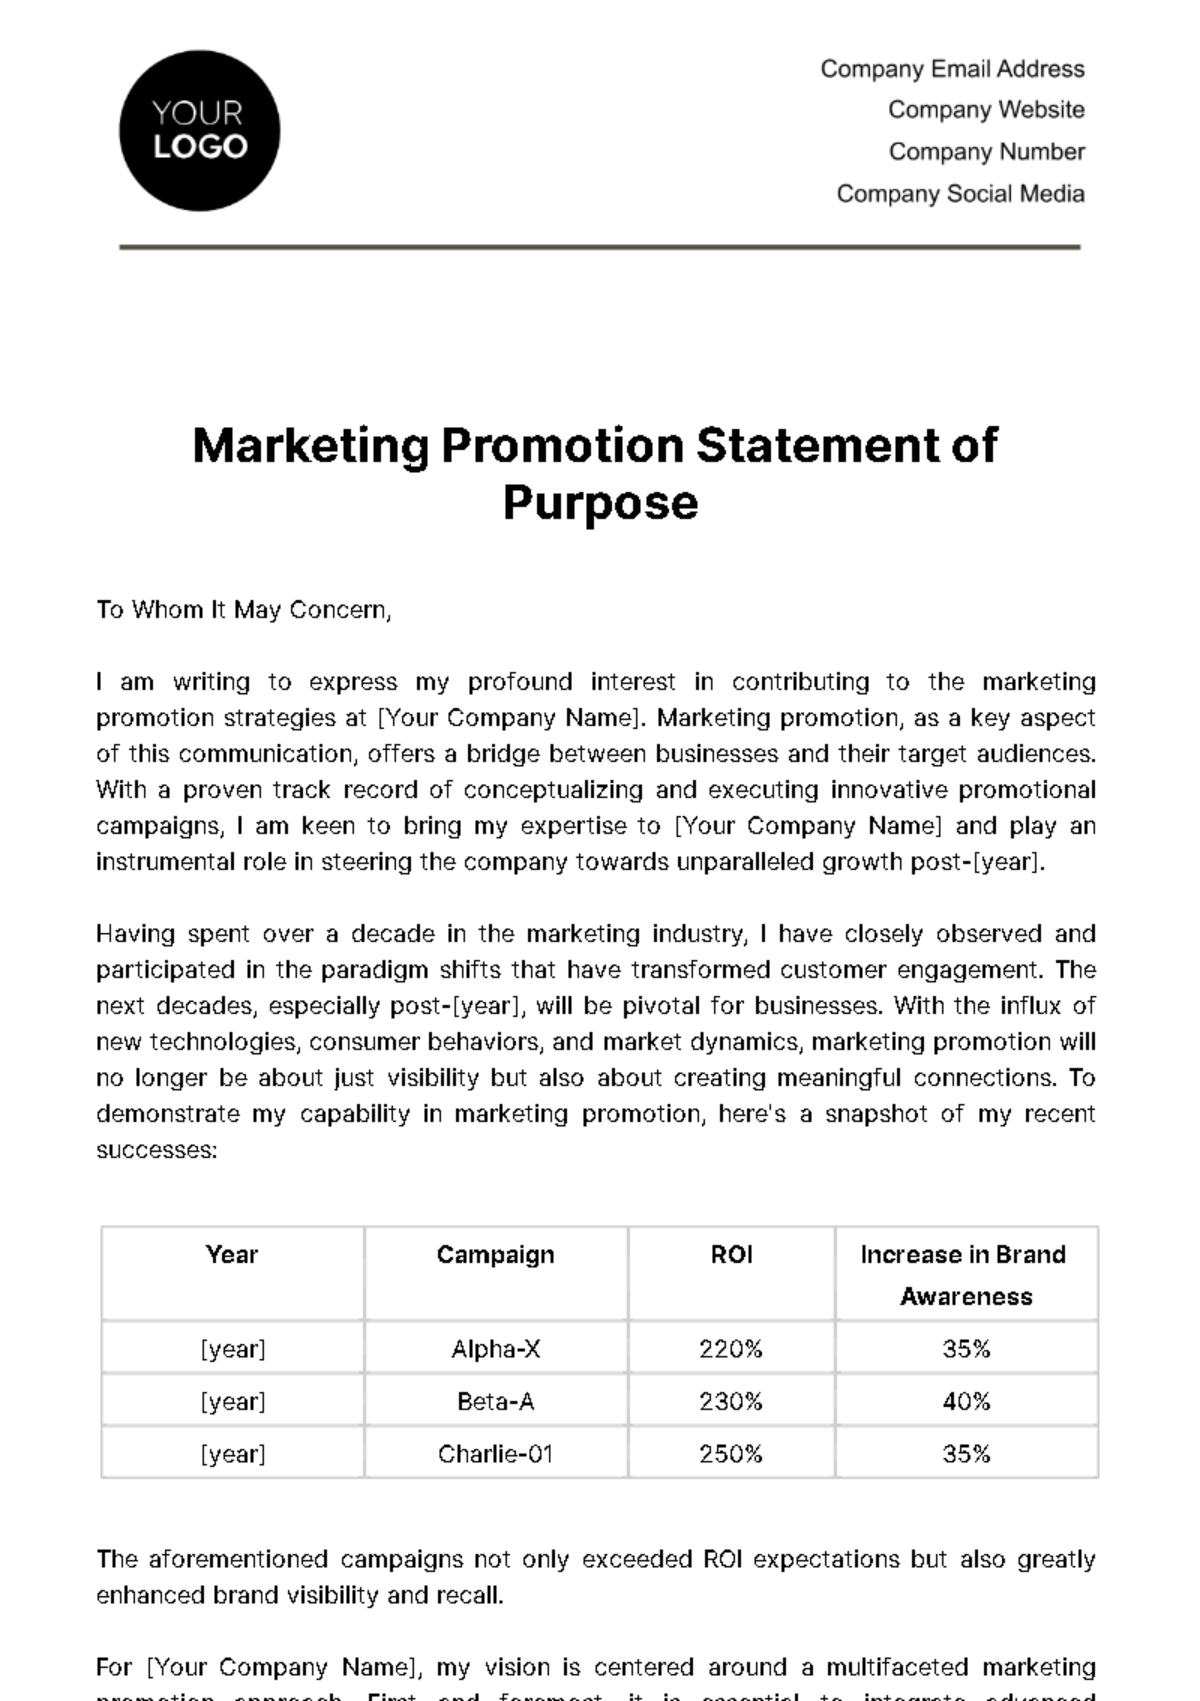 Free Marketing Promotion Statement of Purpose Template